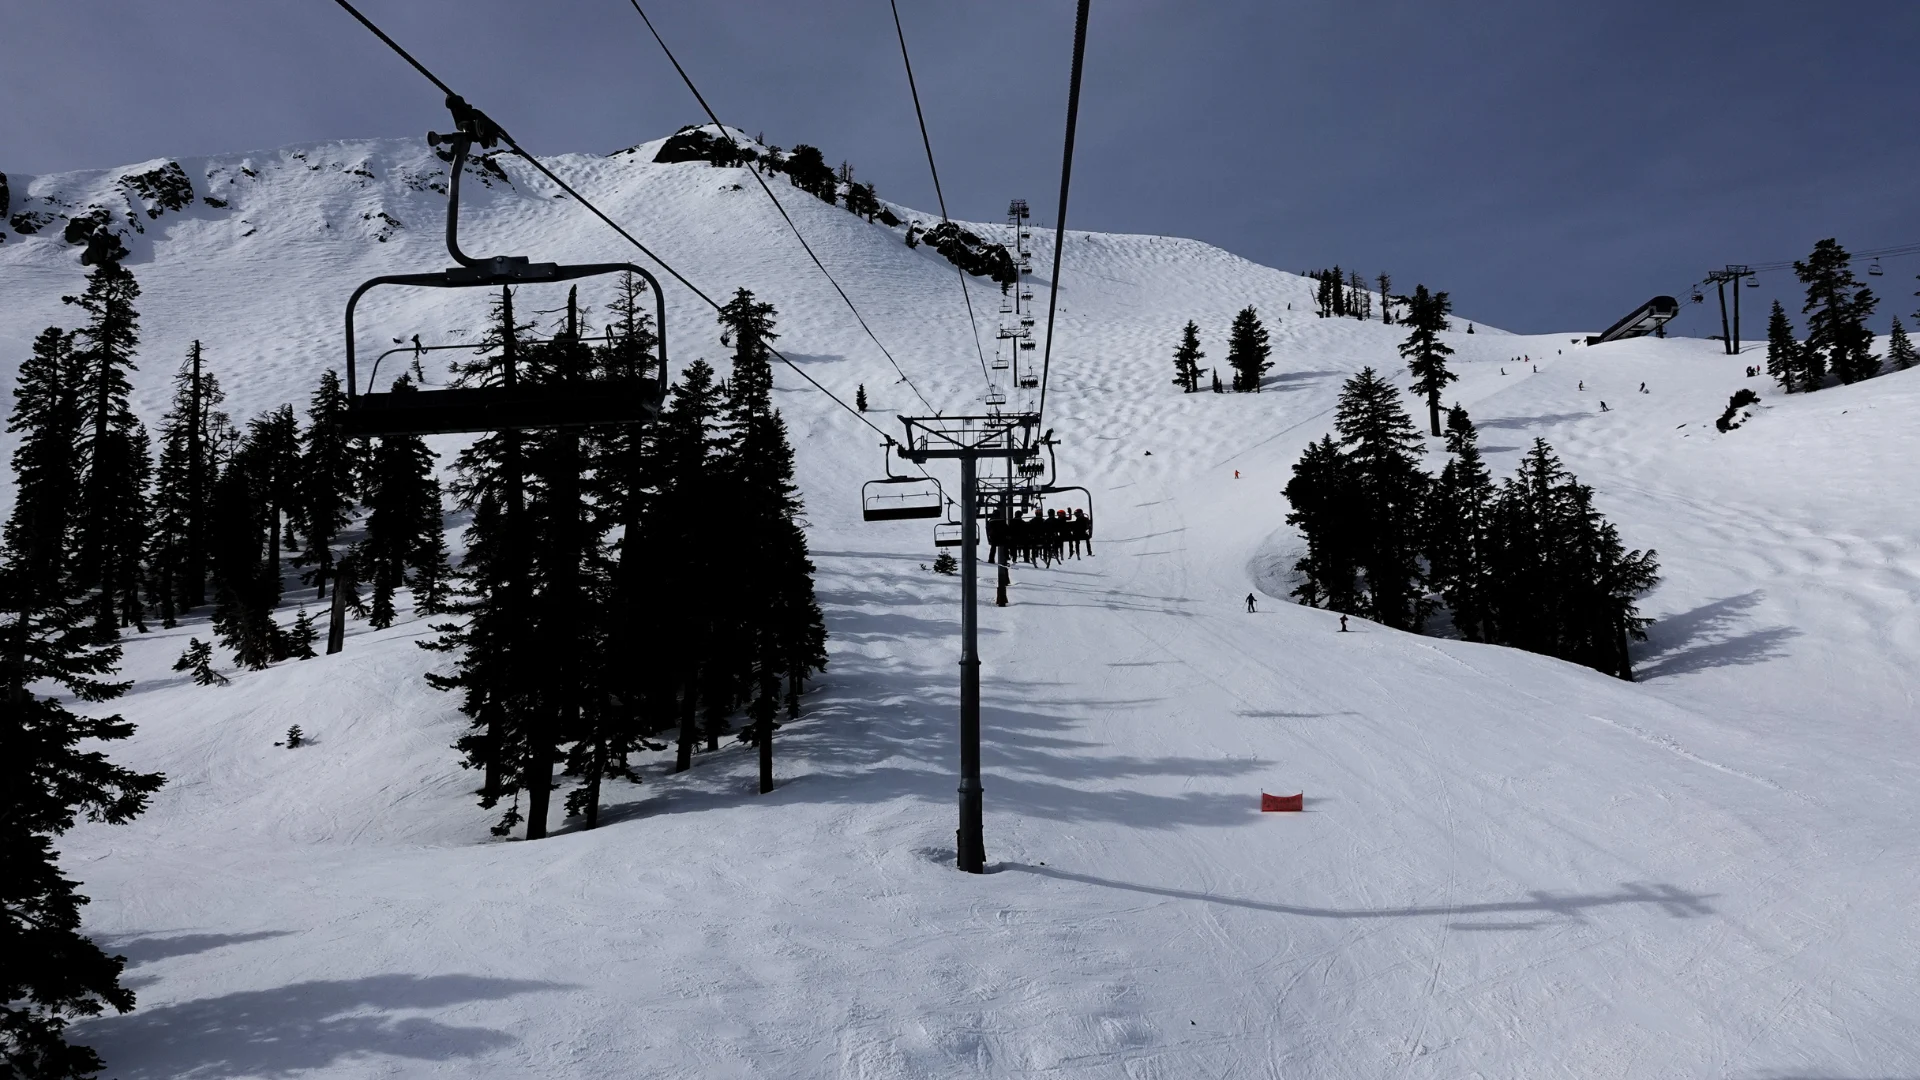 Major avalanche at California ski resort leaves 1 dead, 1 injured